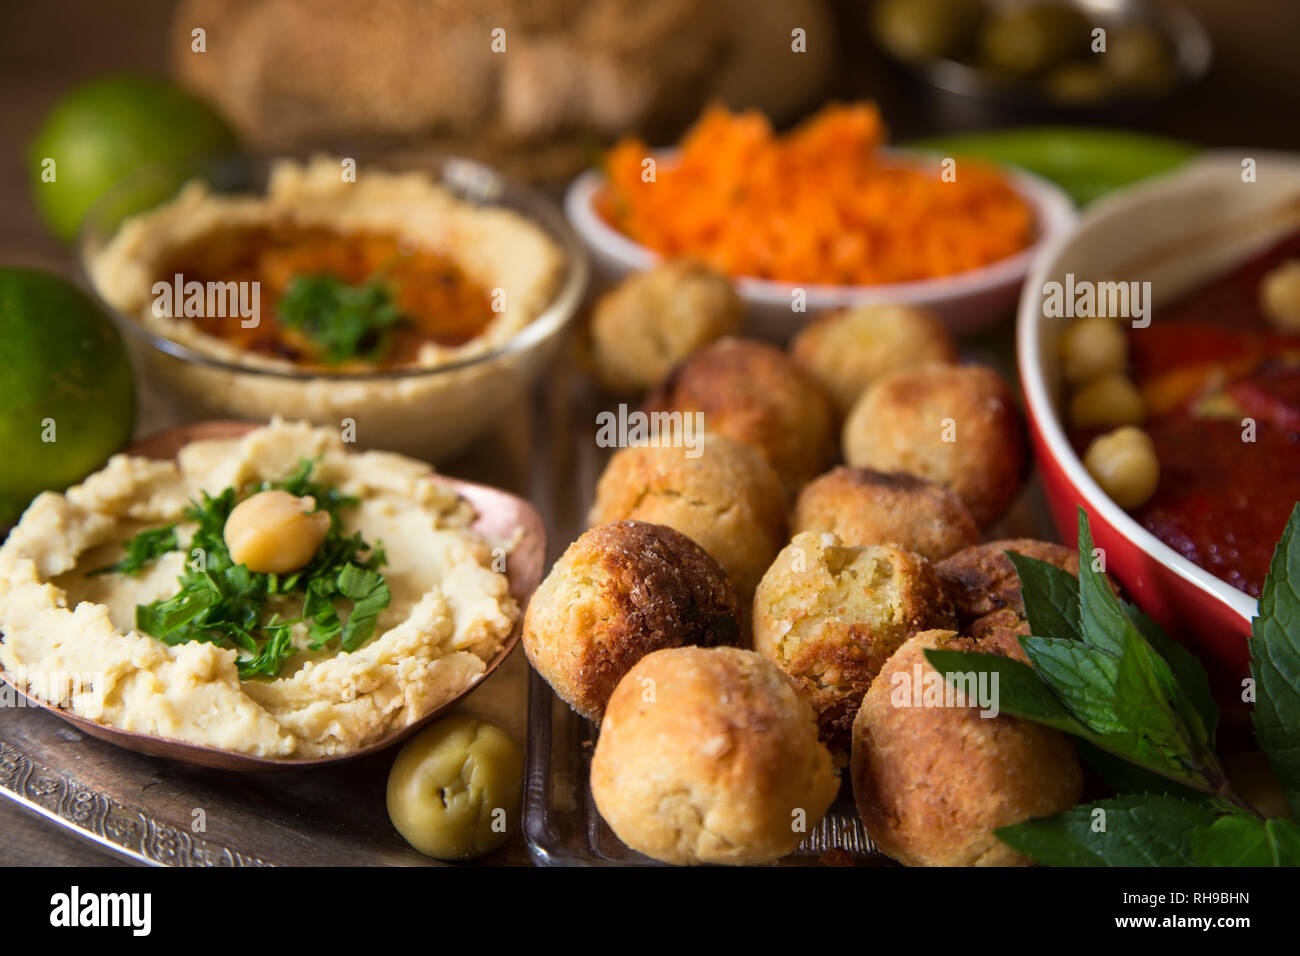 Hummus and falafel close up Stock Photo